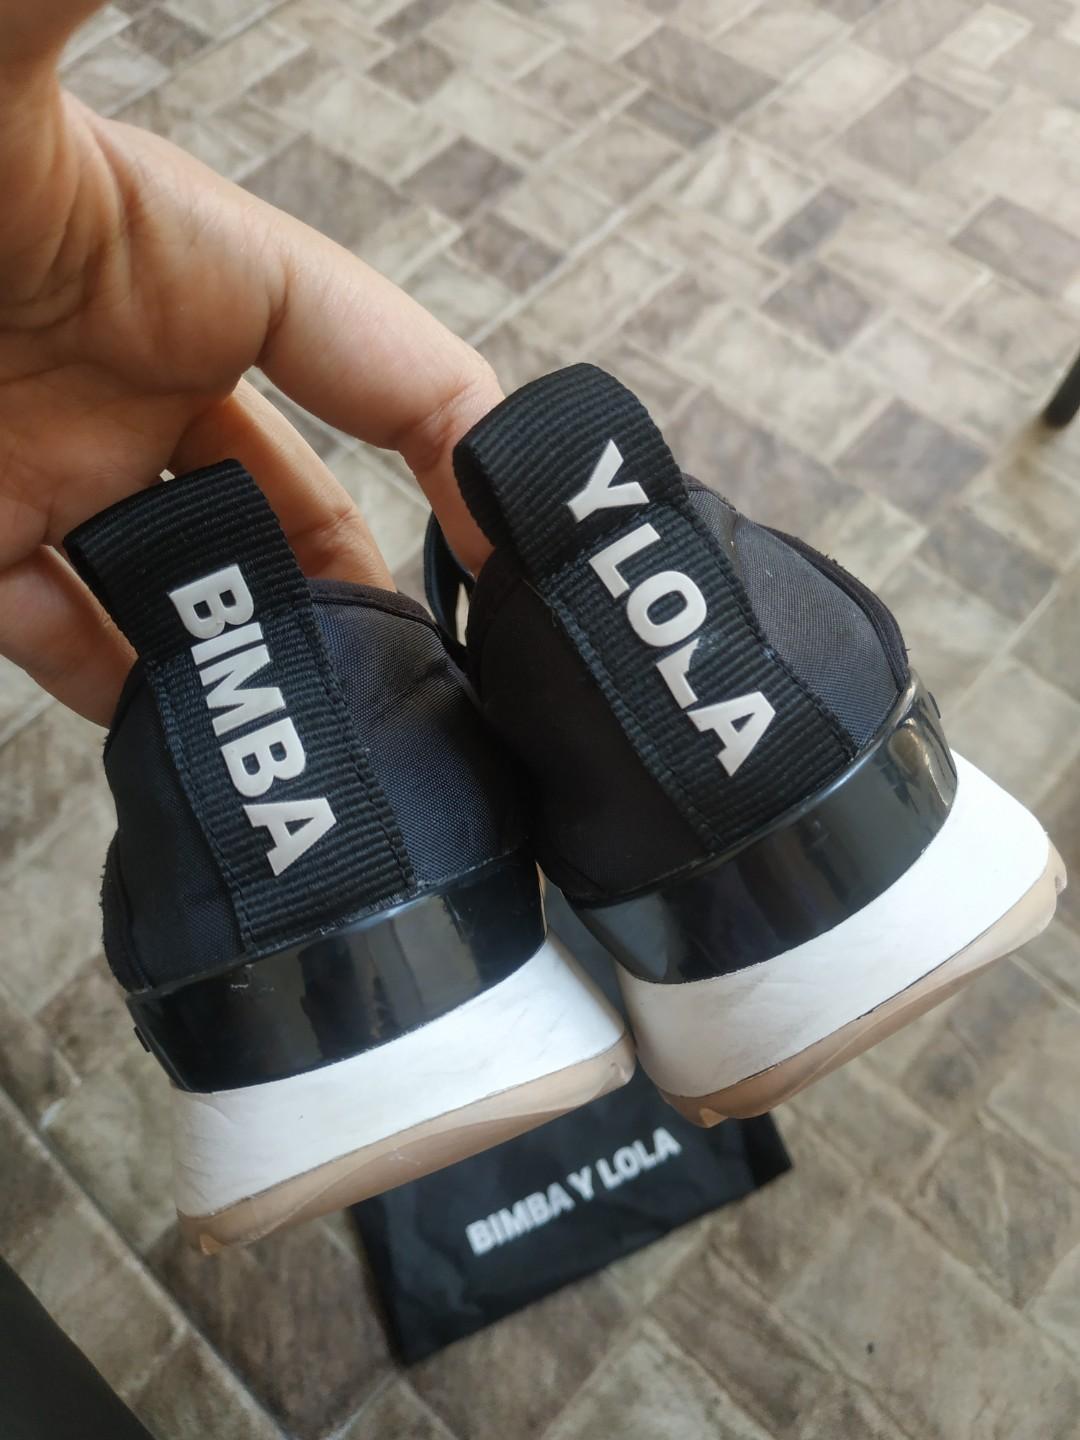 Bimba Y Lola Shoes